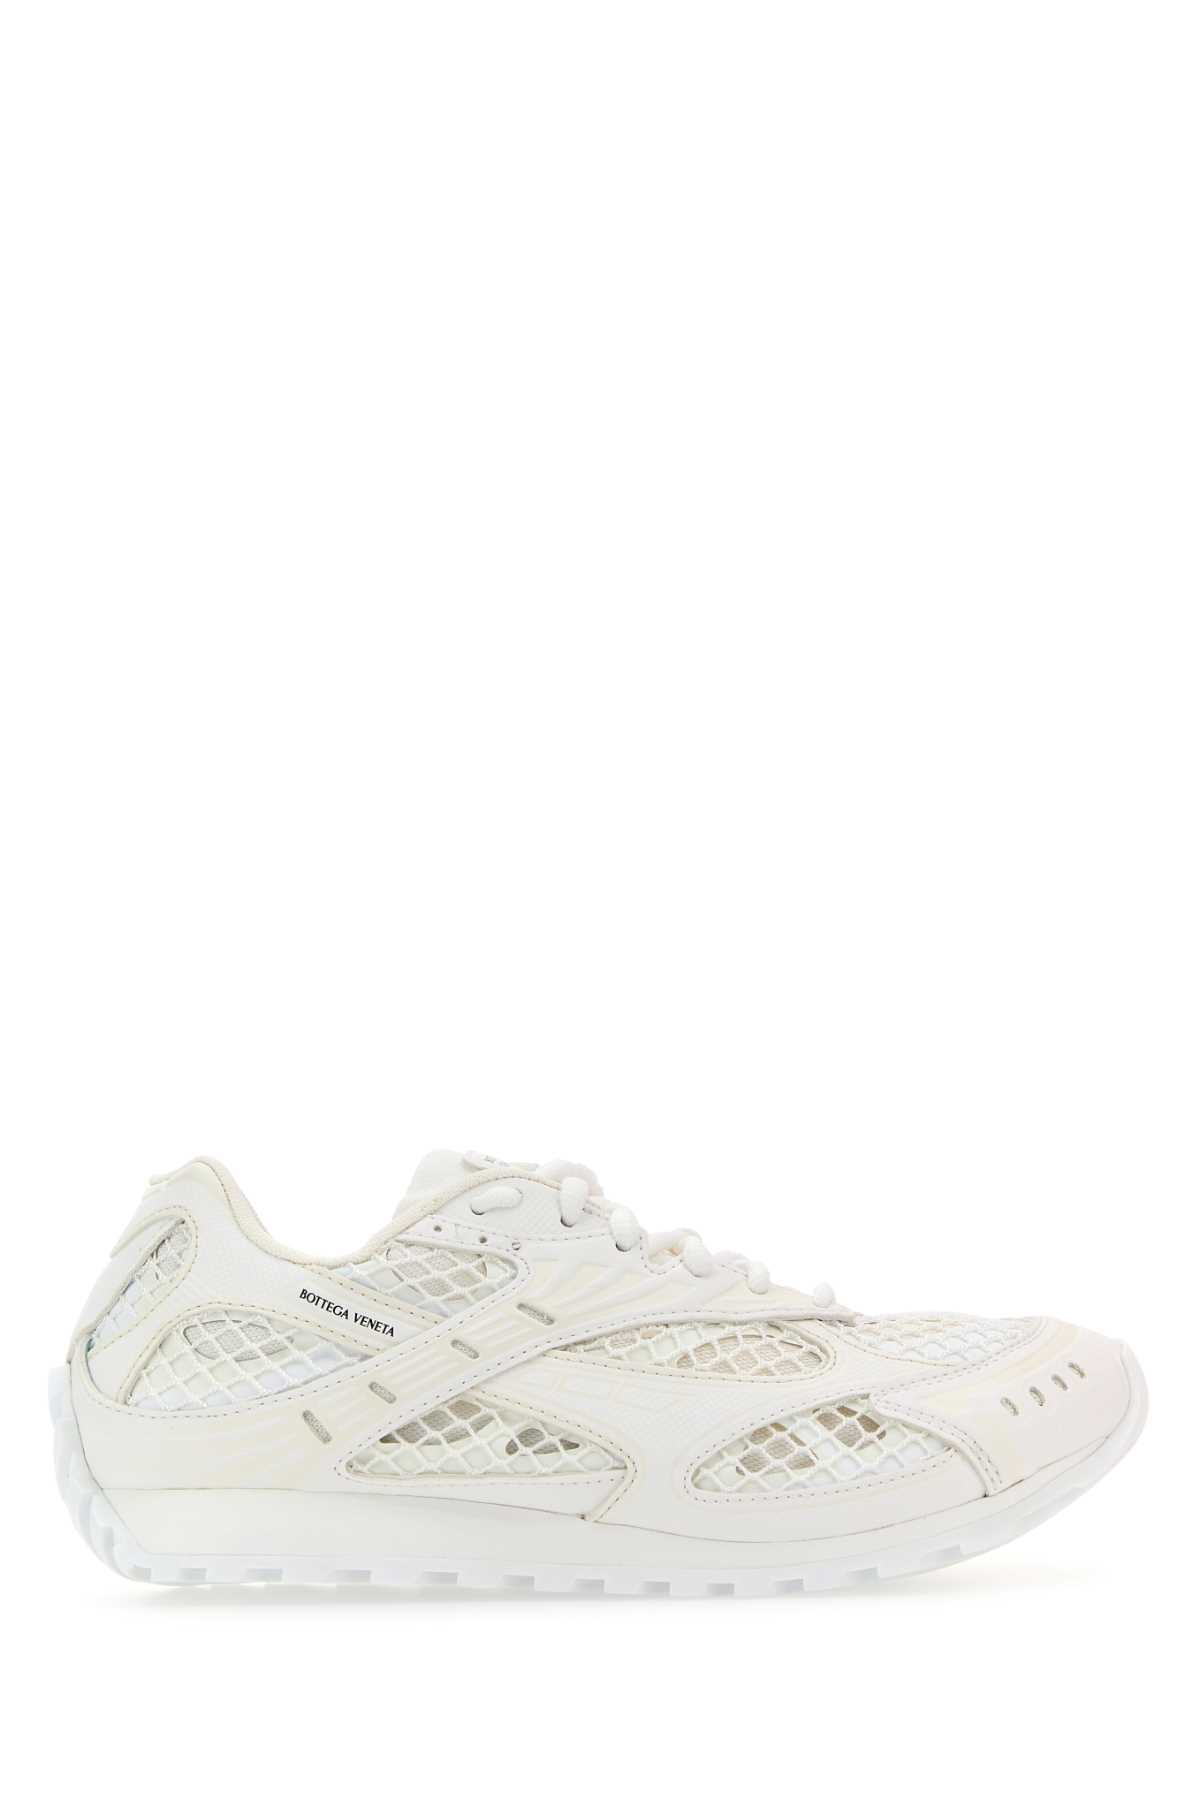 Shop Bottega Veneta White Orbit Sneakers